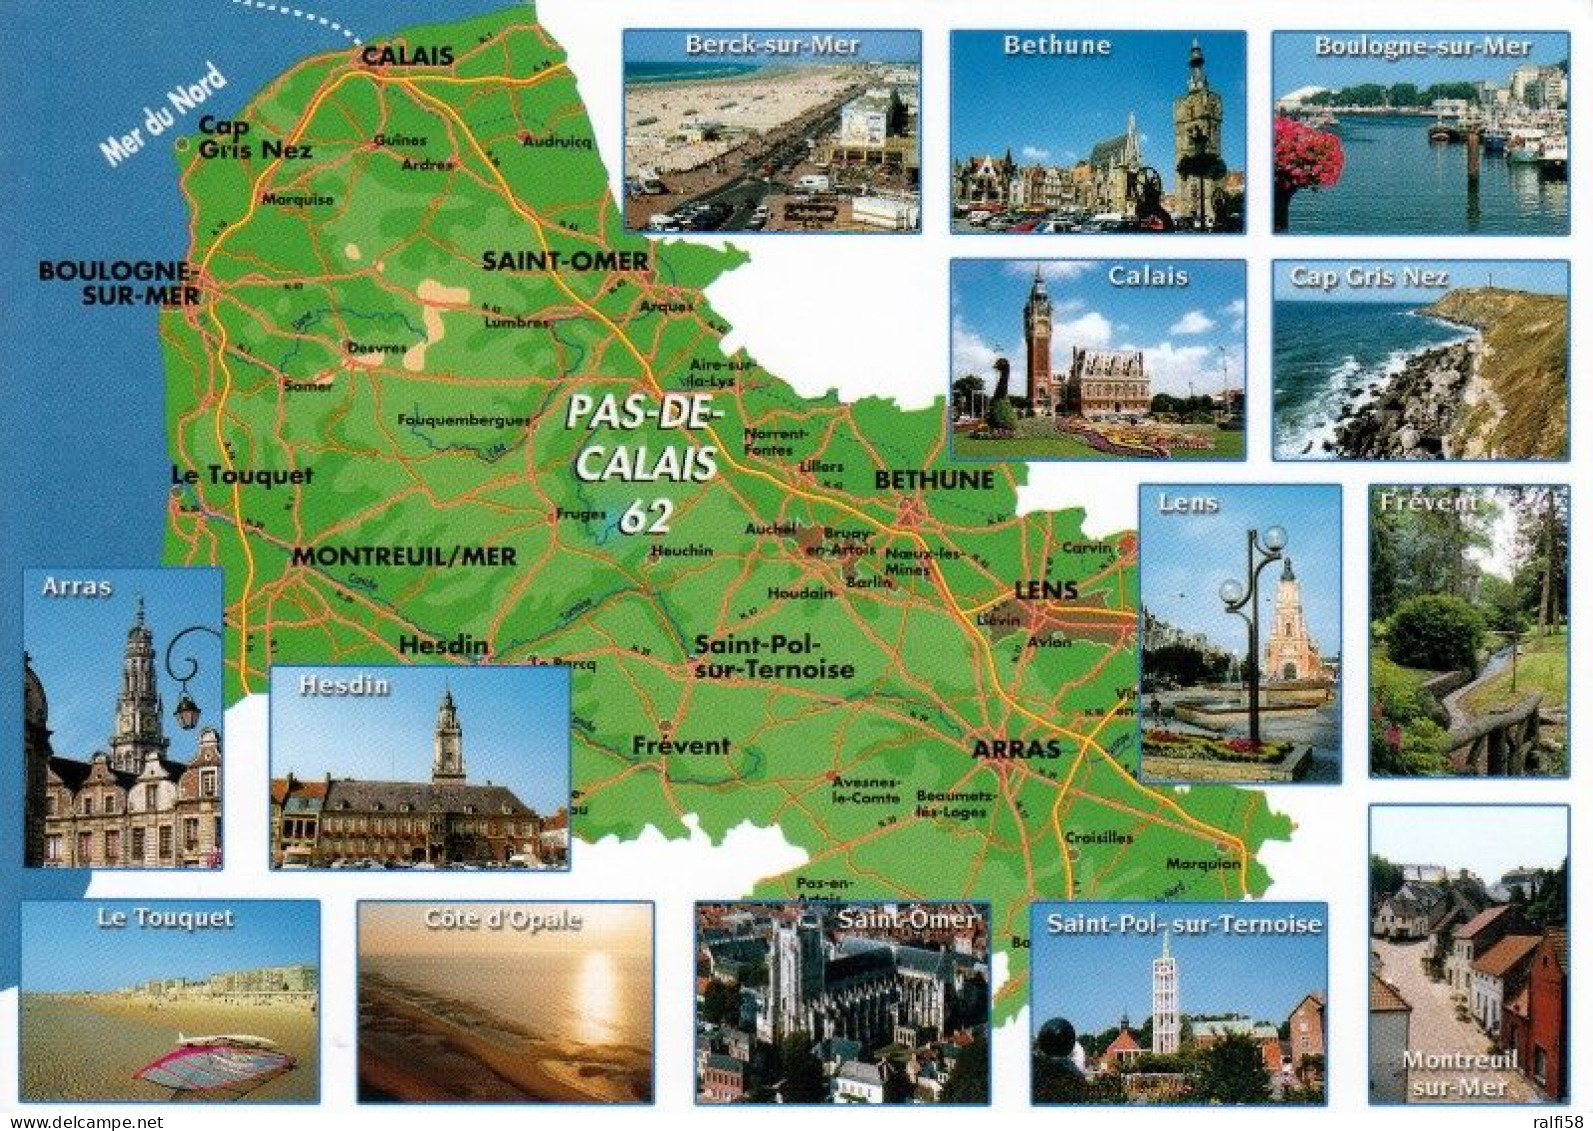 1 Map Of France * 1 Ansichtskarte Mit Der Landkarte - Département Pas-de-Calais - Ordnungsnummer 62 * - Mapas